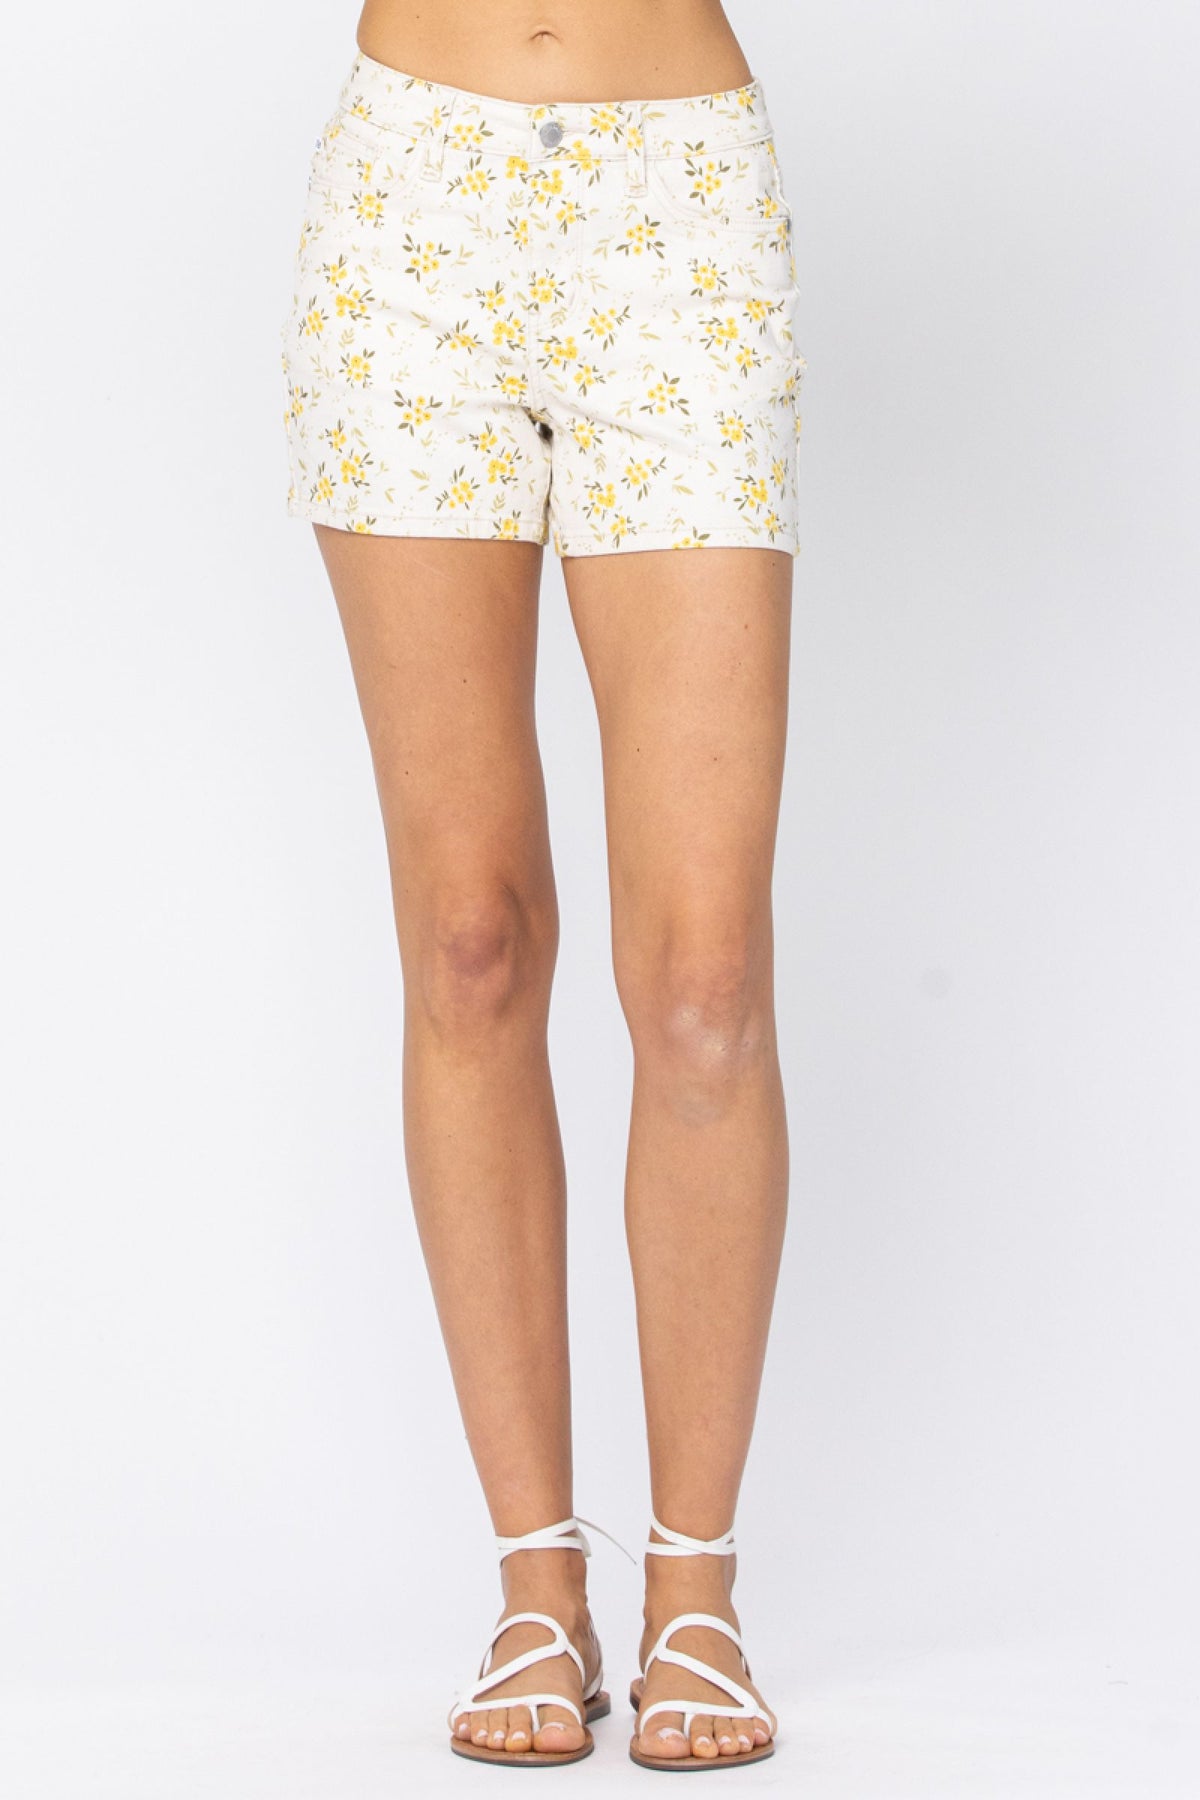 Judy Blue Floral Shorts